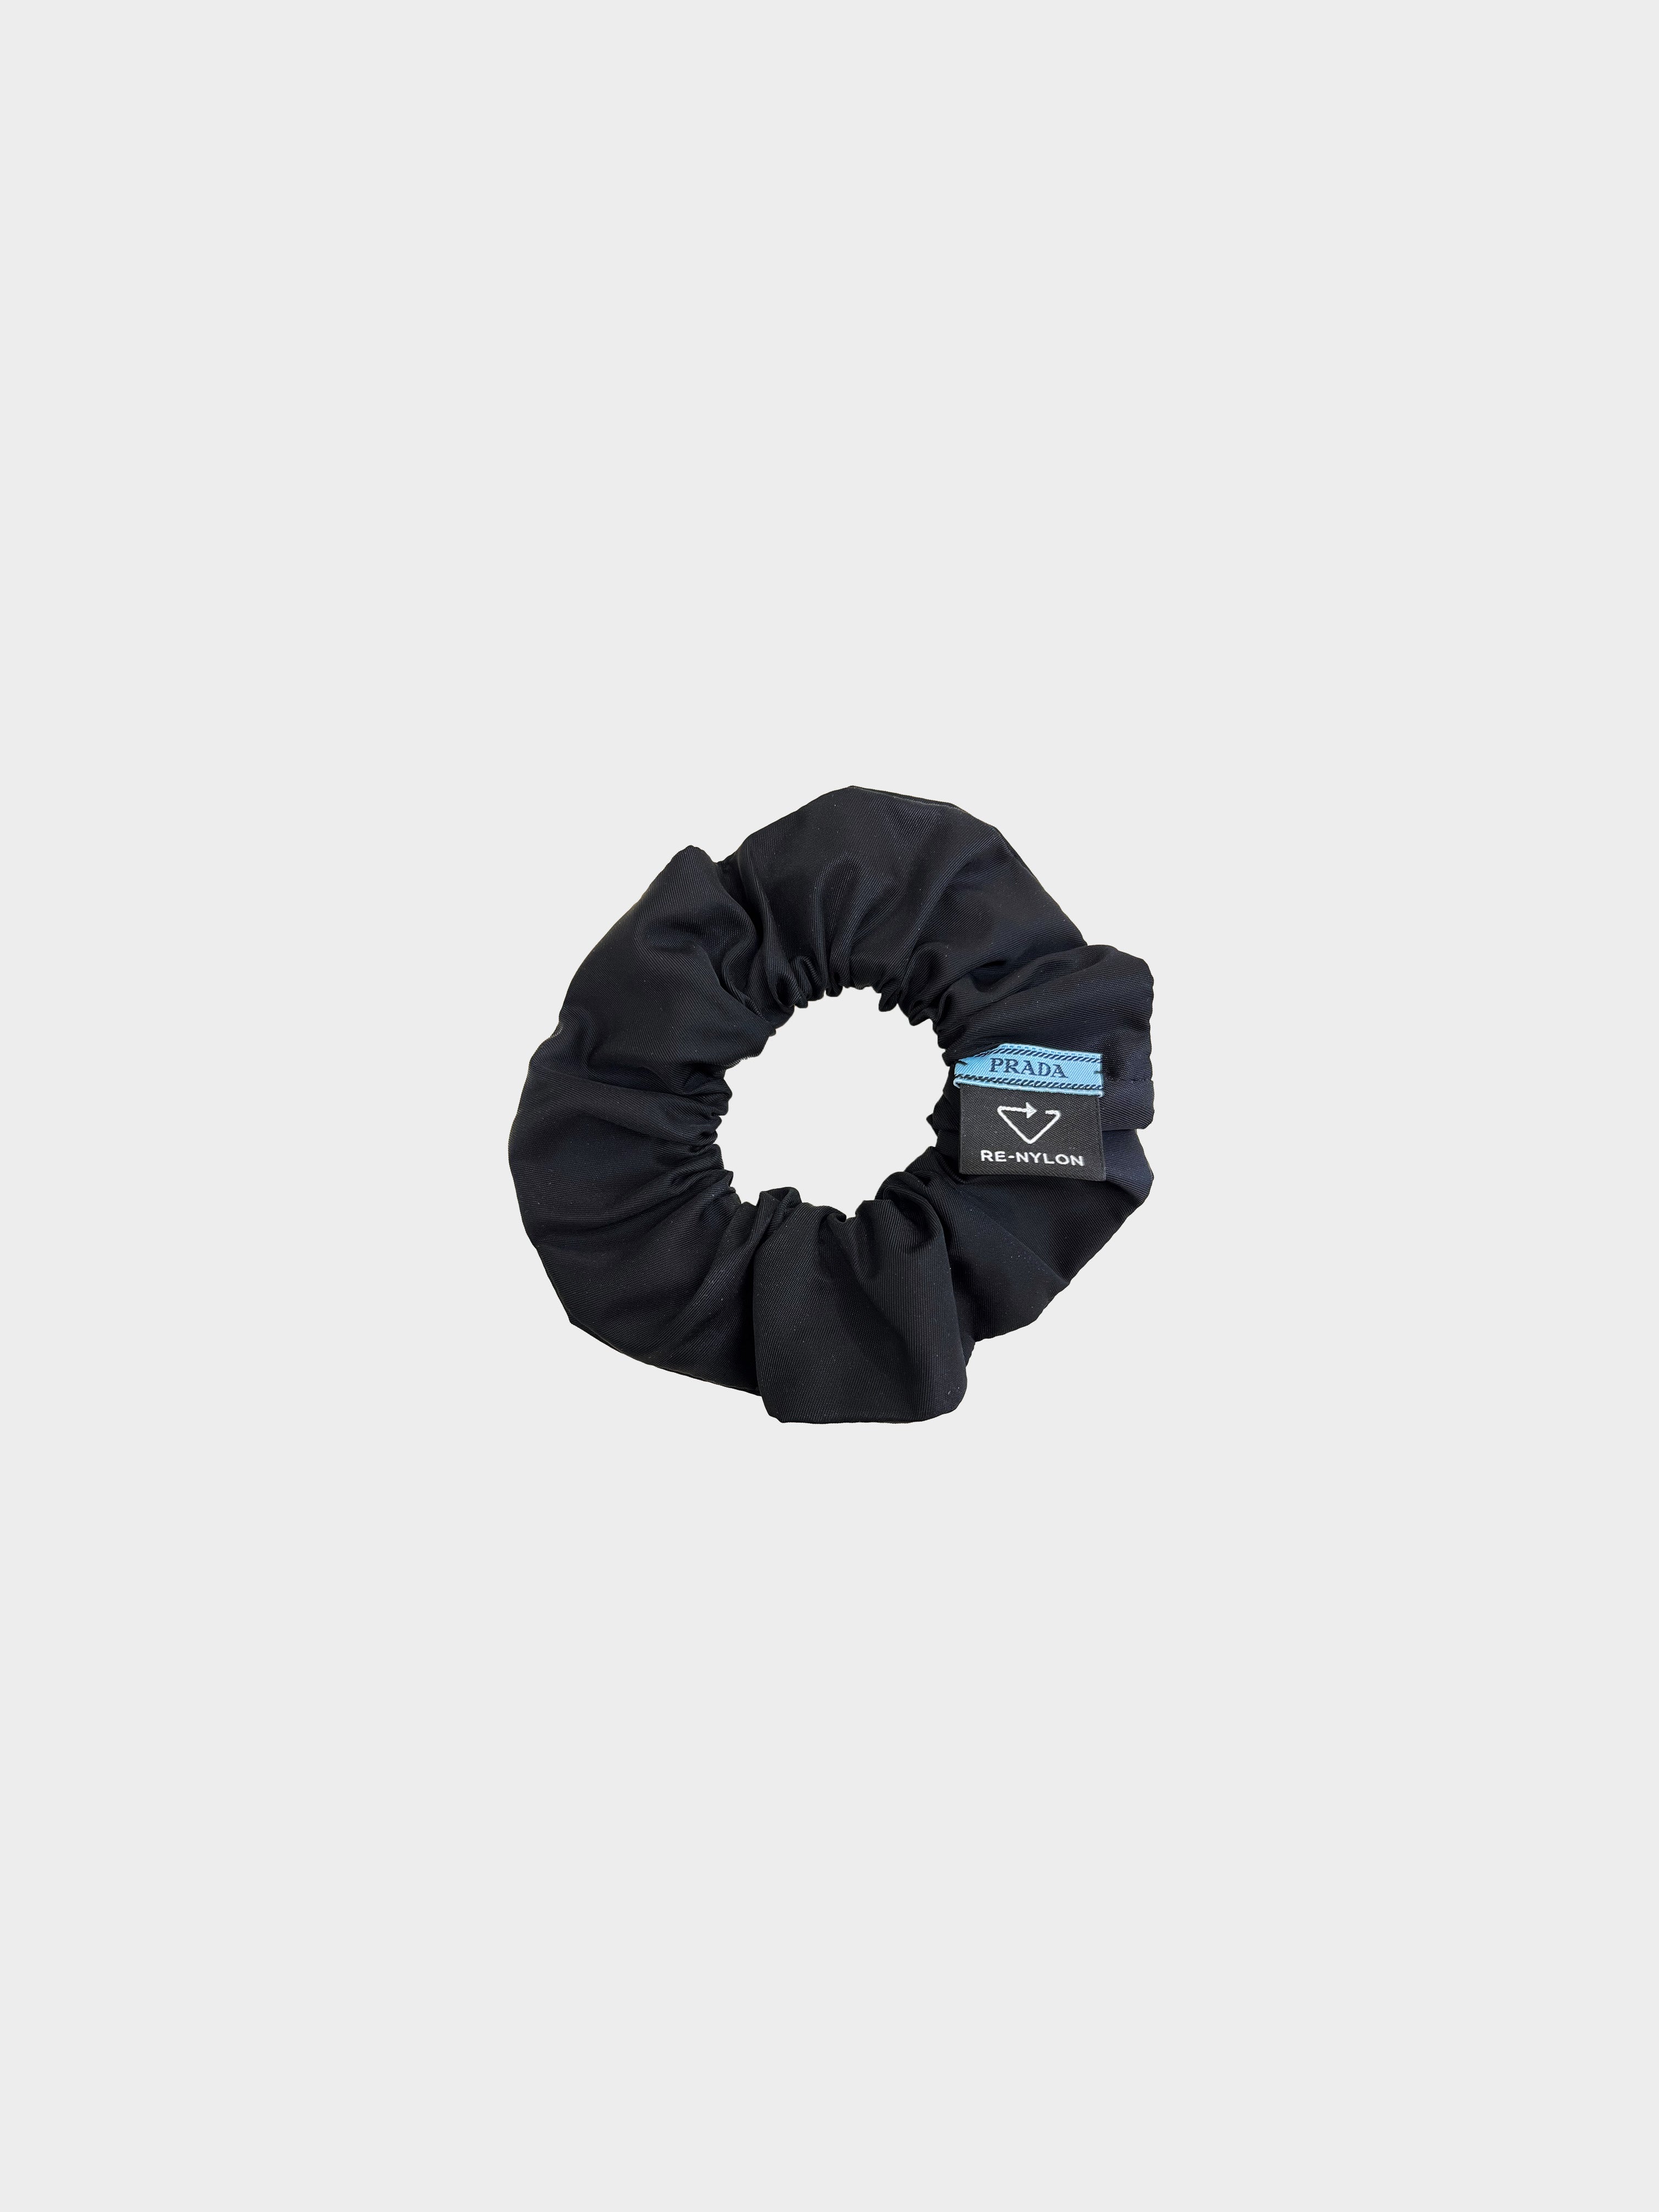 Prada 2020s Re-Nylon Black Logo Scrunchie